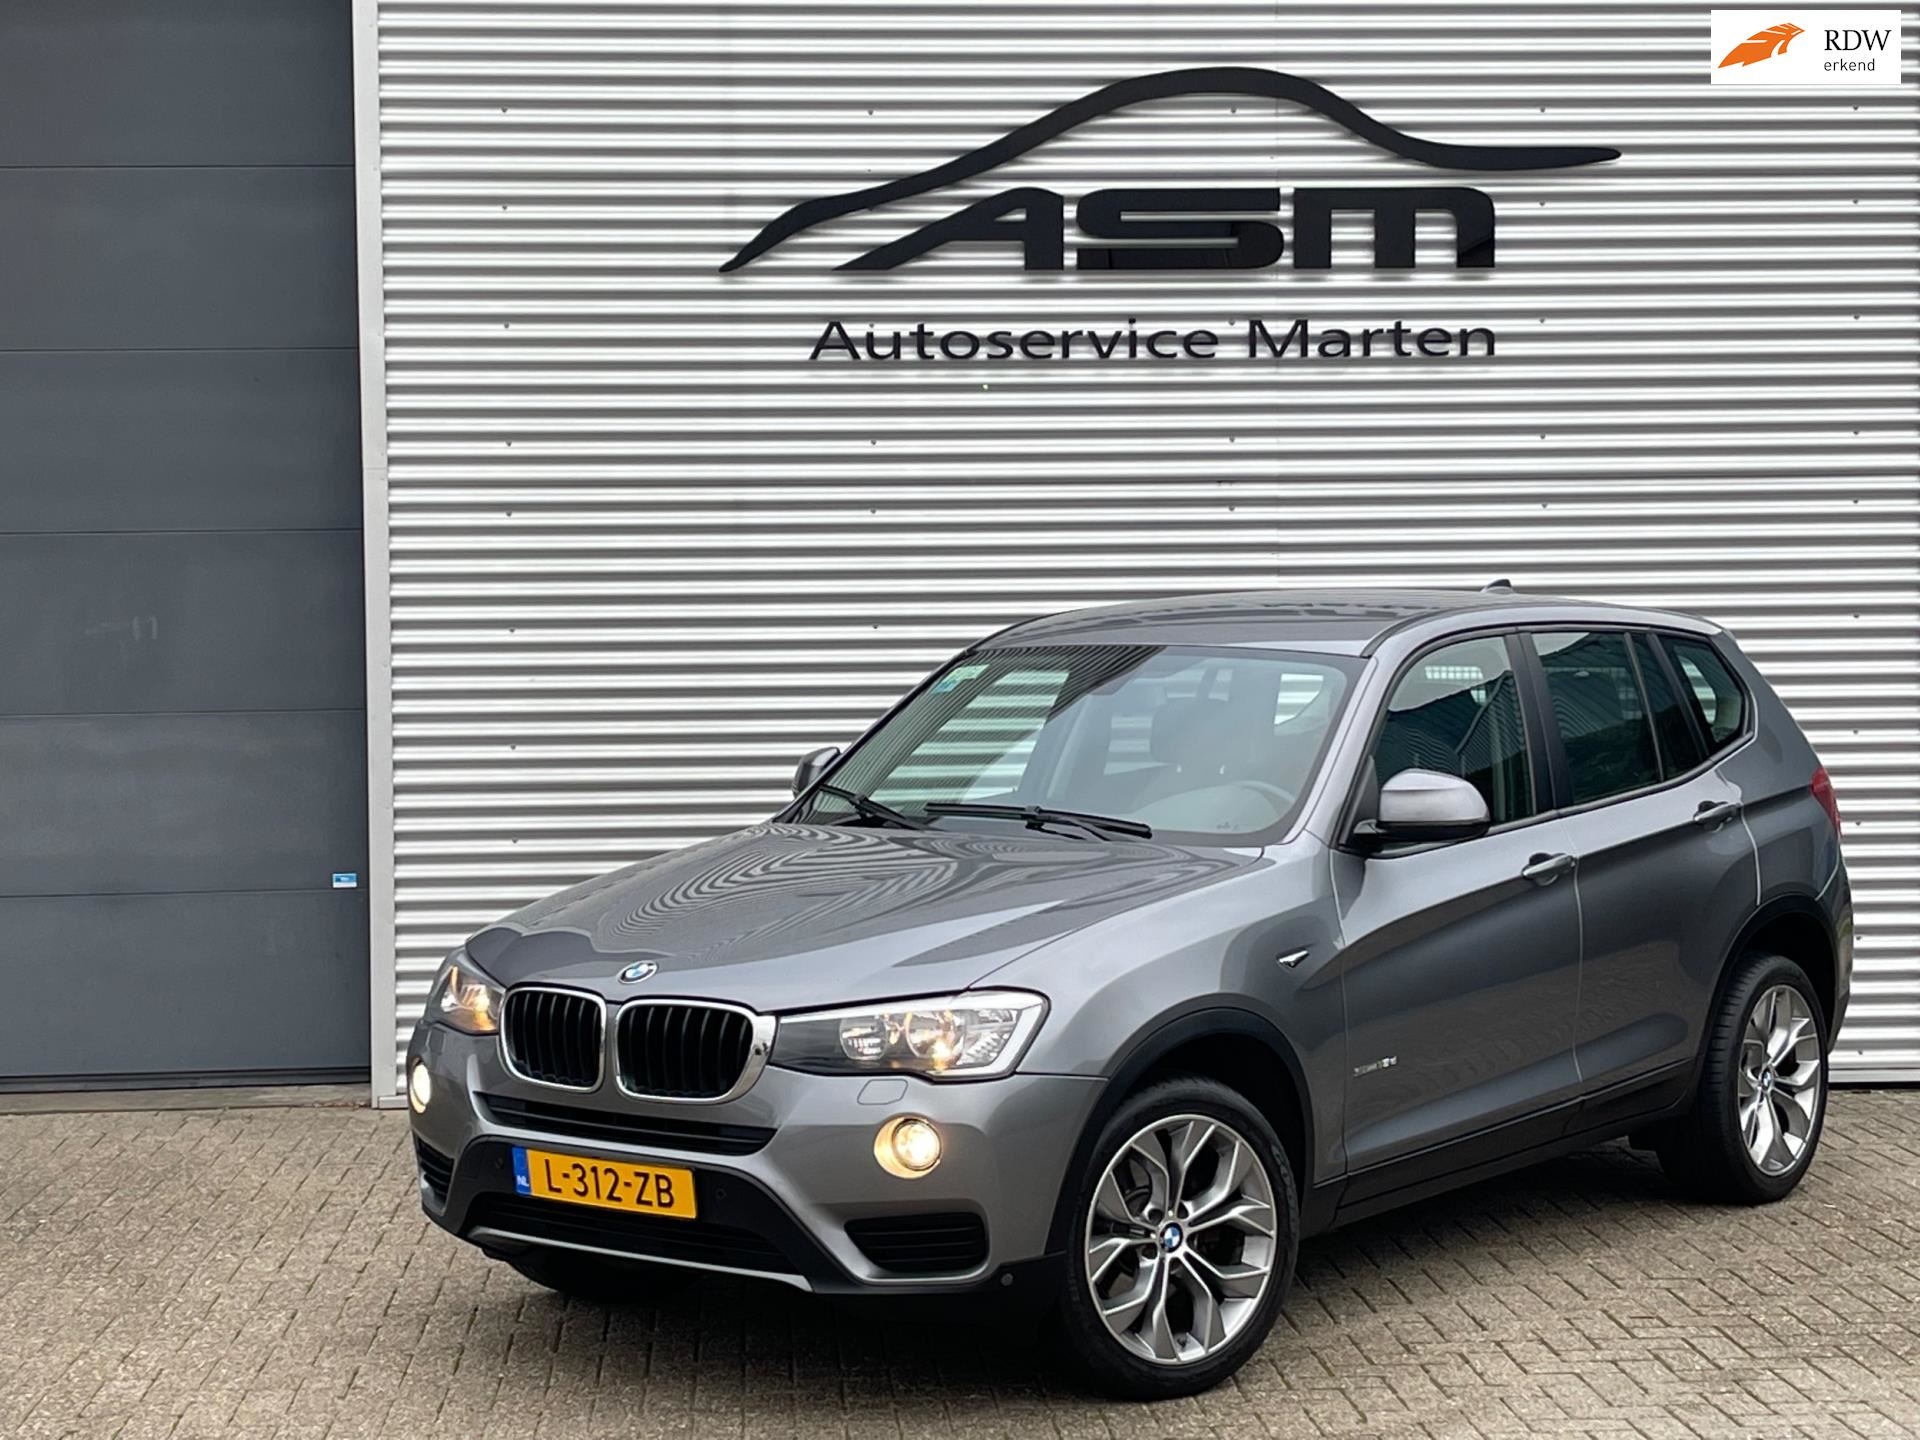 BMW X3 occasion - ASM Autoservice Marten